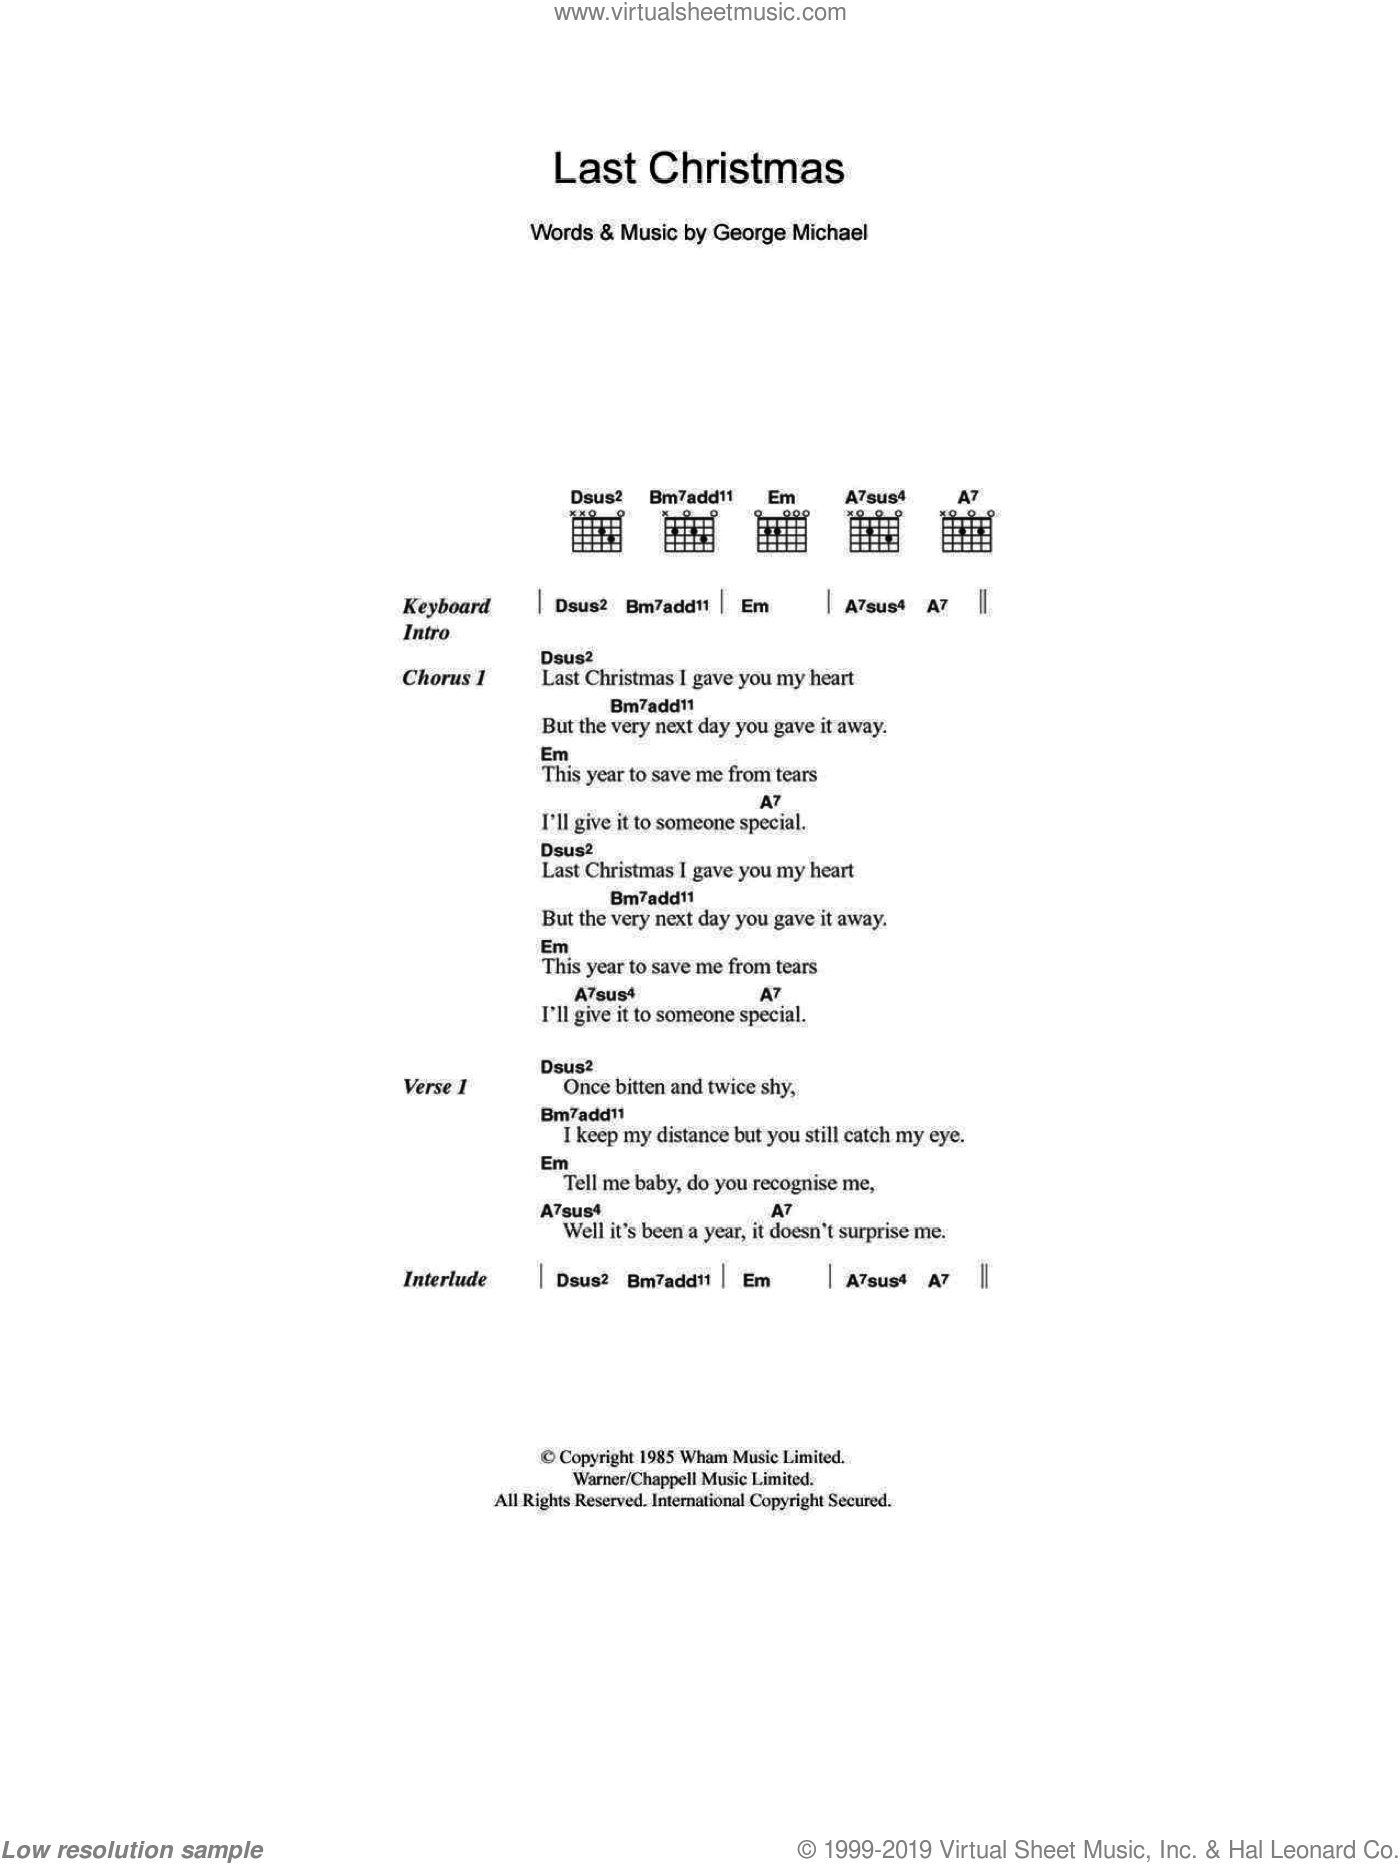 Wham! - Last Christmas sheet music for guitar (chords) PDF